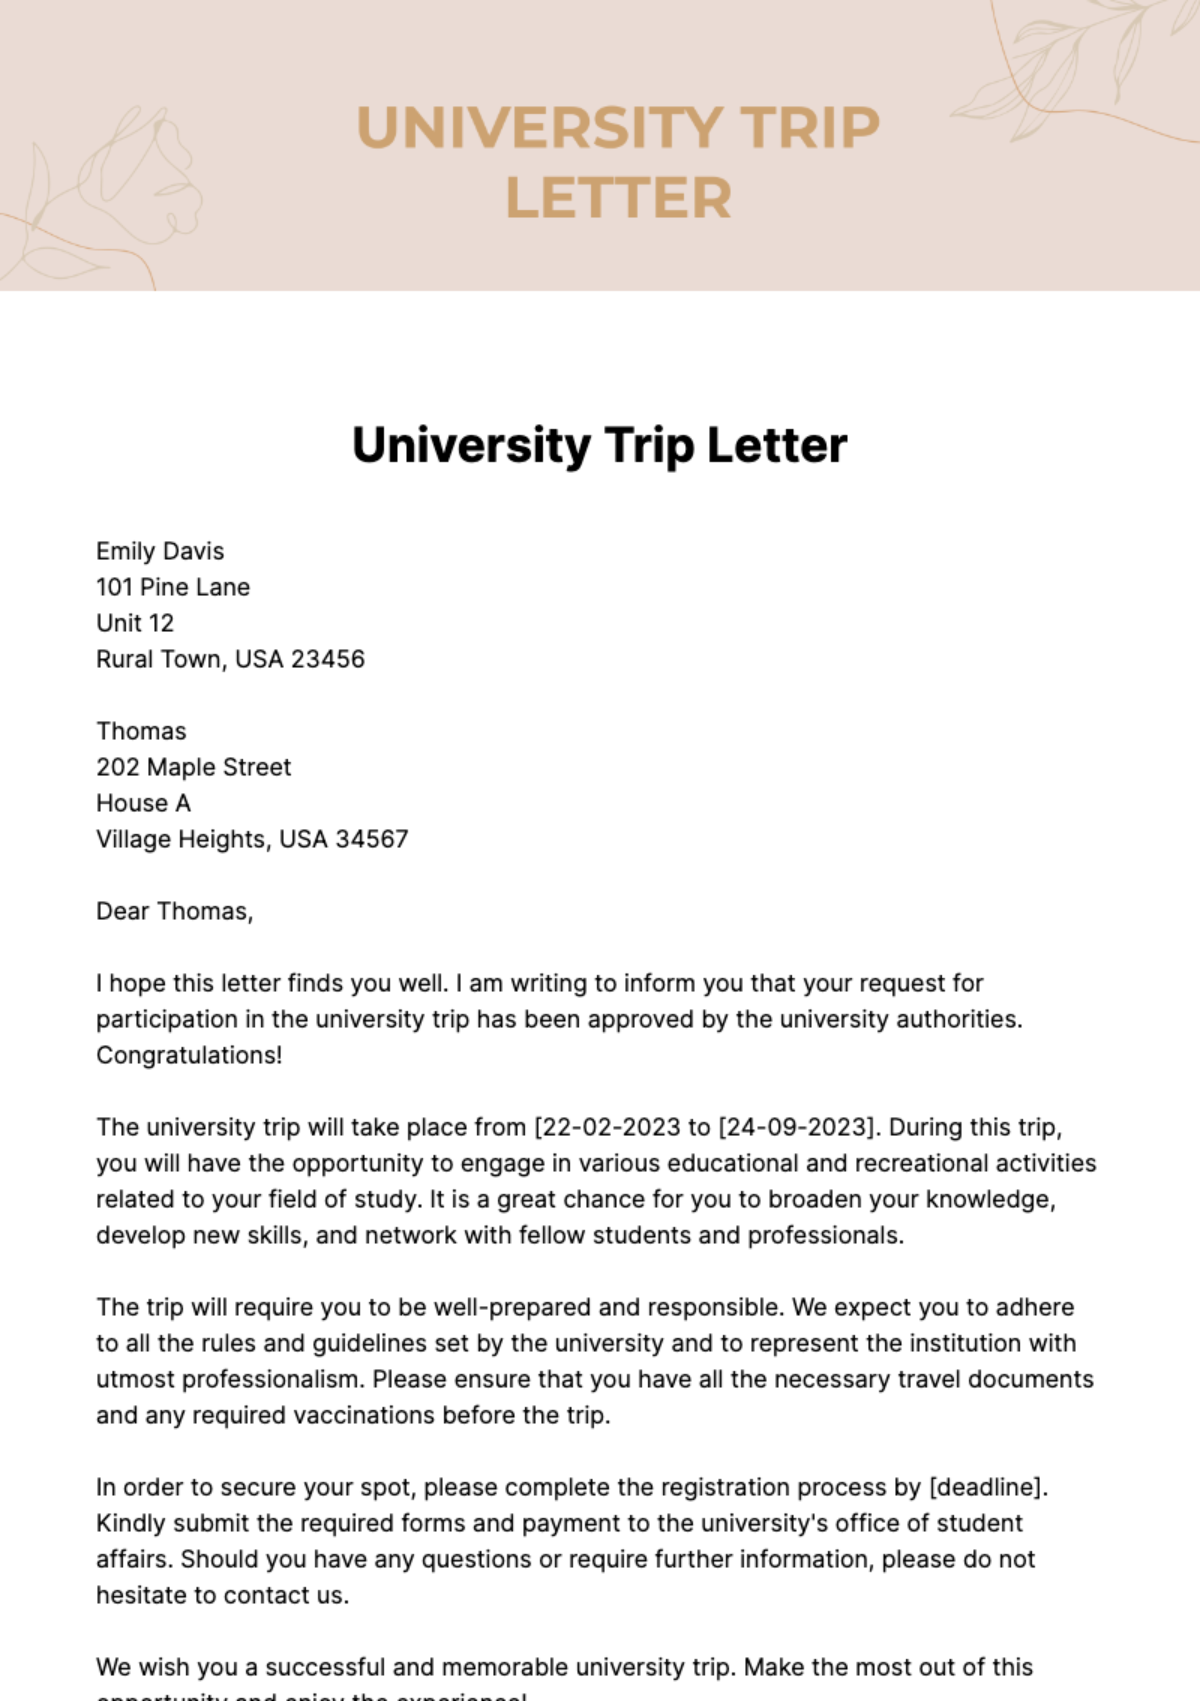 University Trip Letter Template